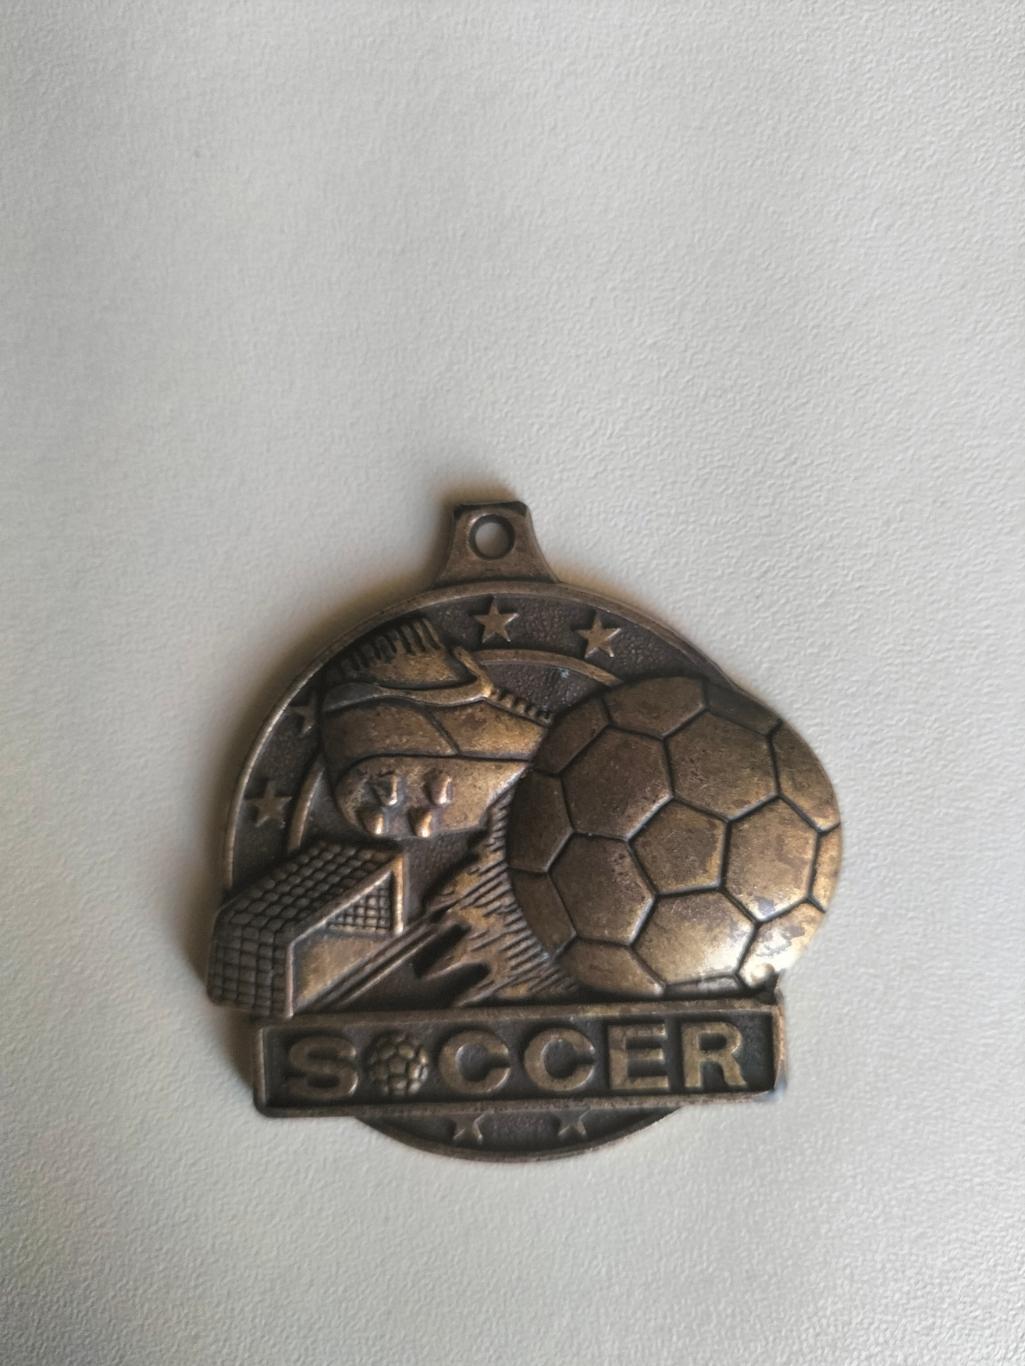 Soccer (медаль) 2